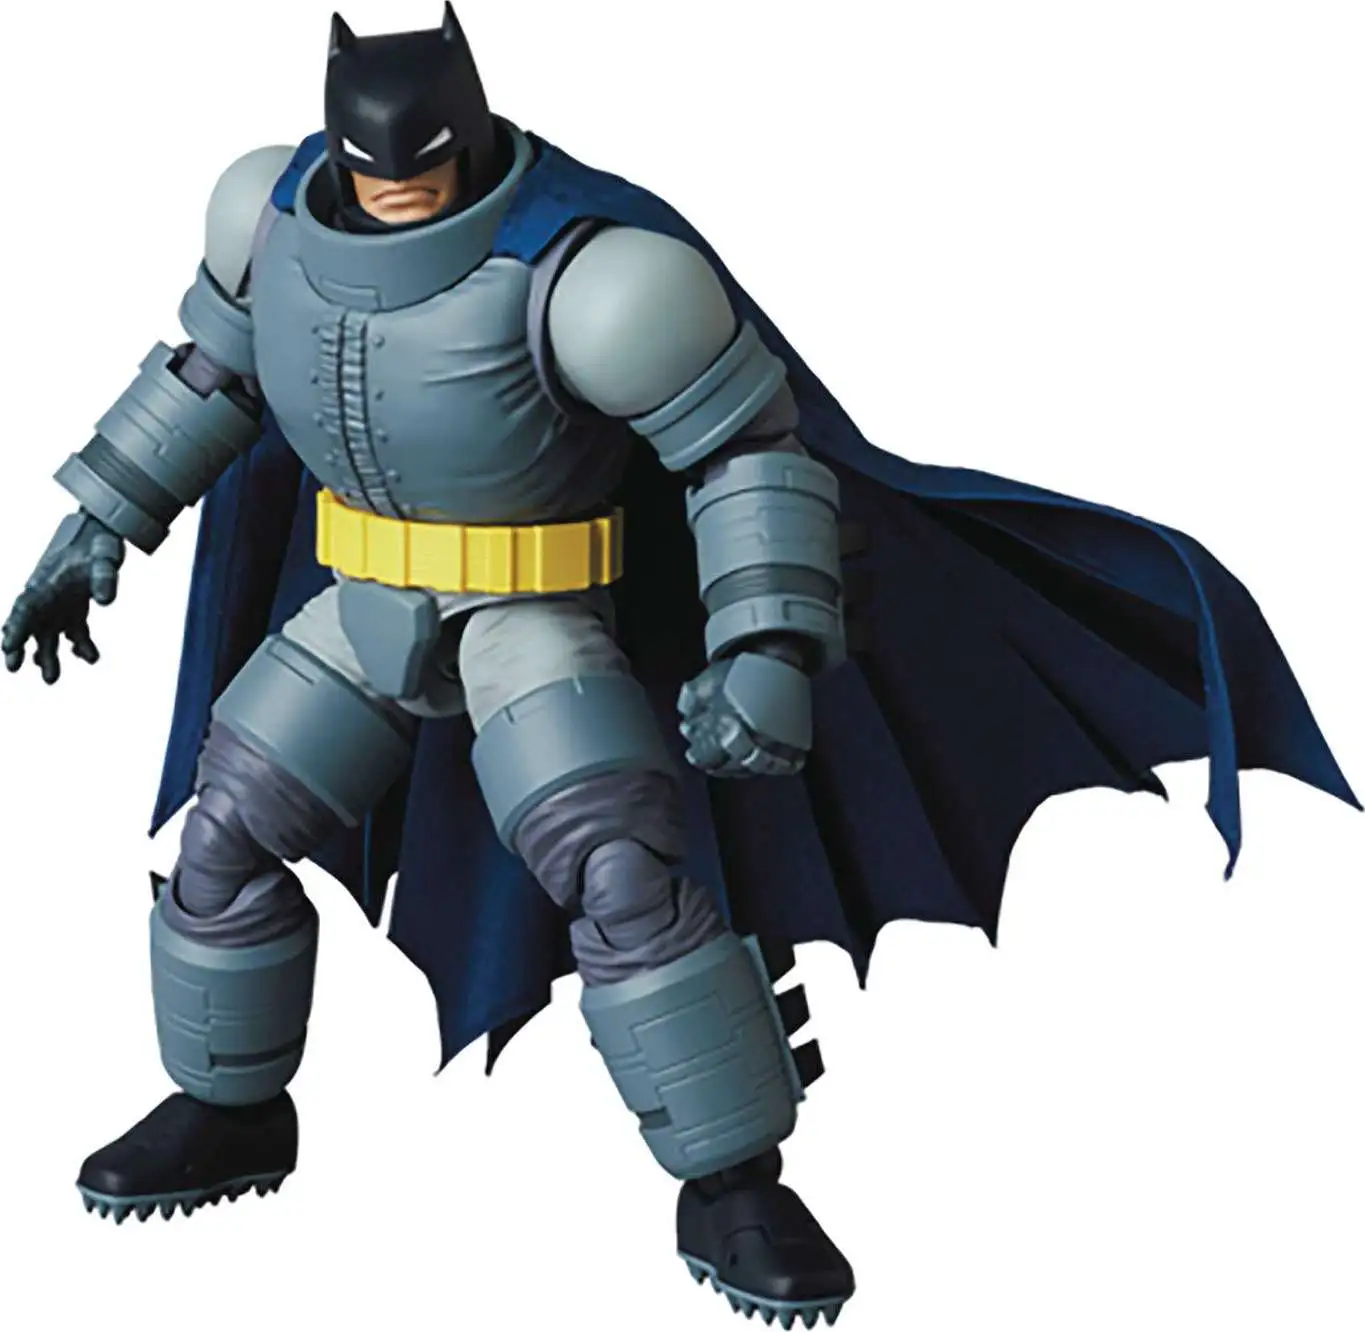 Medicom DC Hero Batman Sofubi Action Figure Black Costume Version 